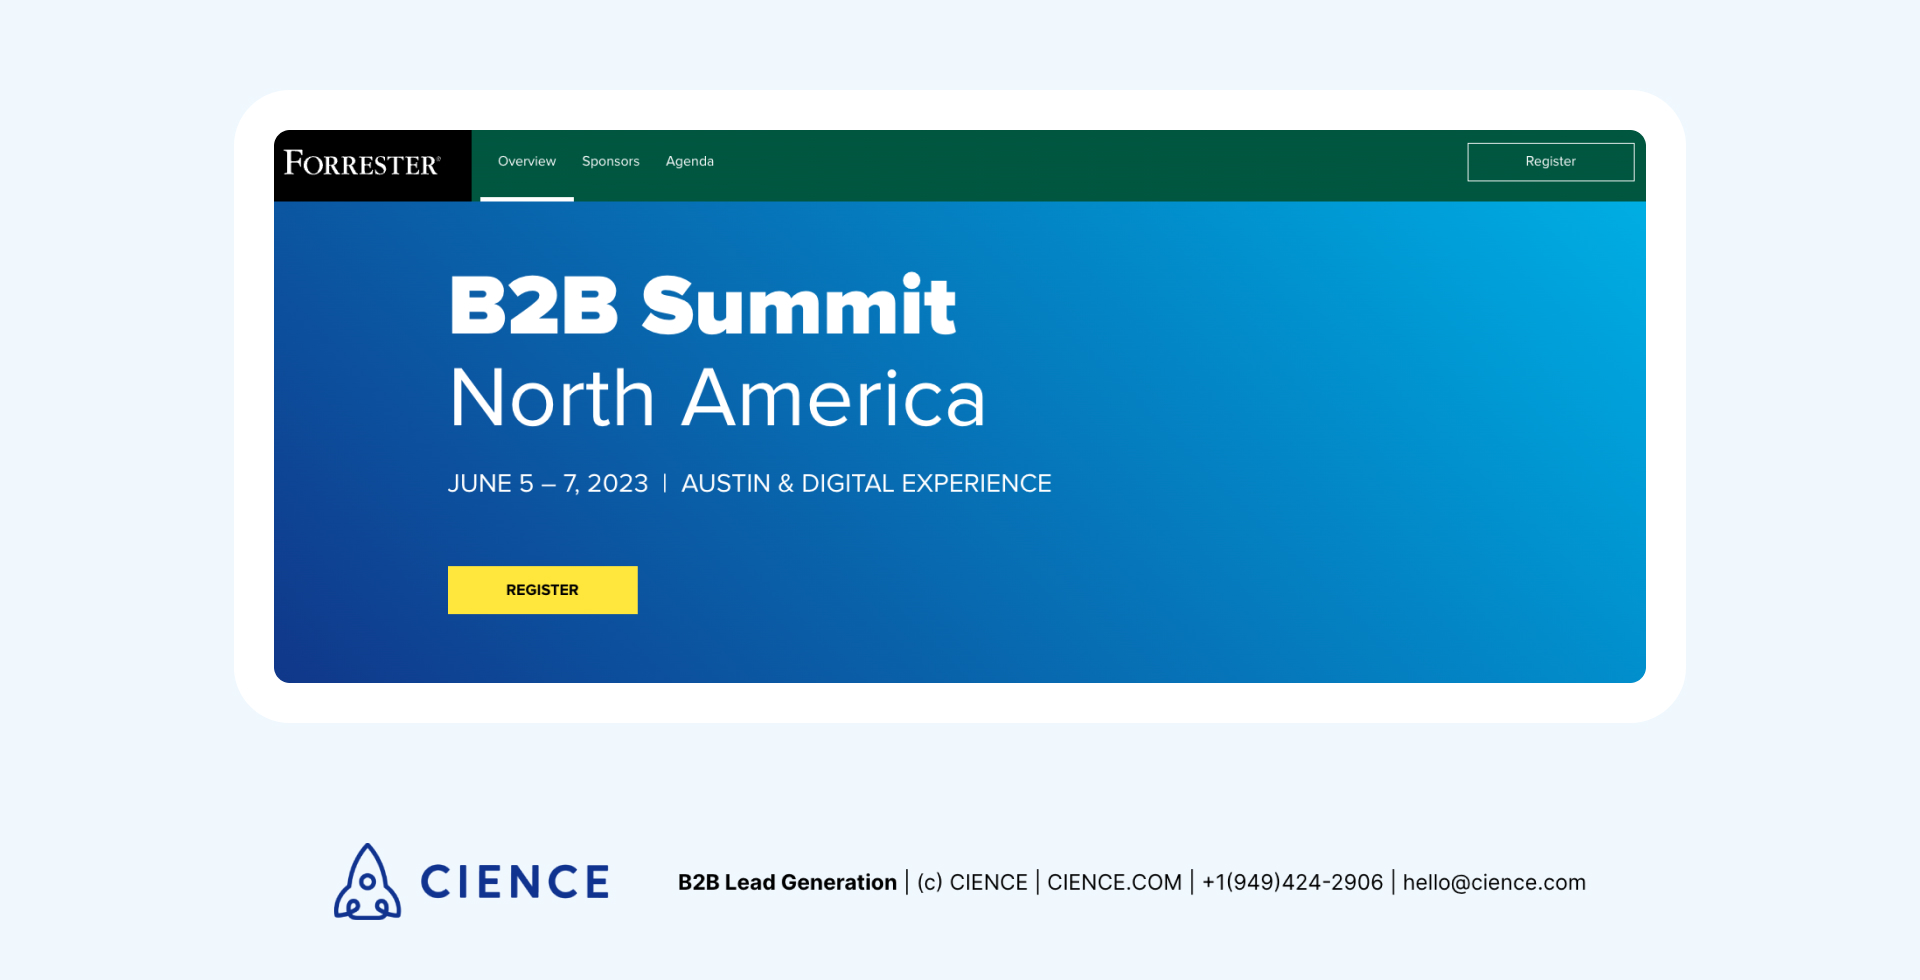 Sales conference 2023 - B2B Summit North America